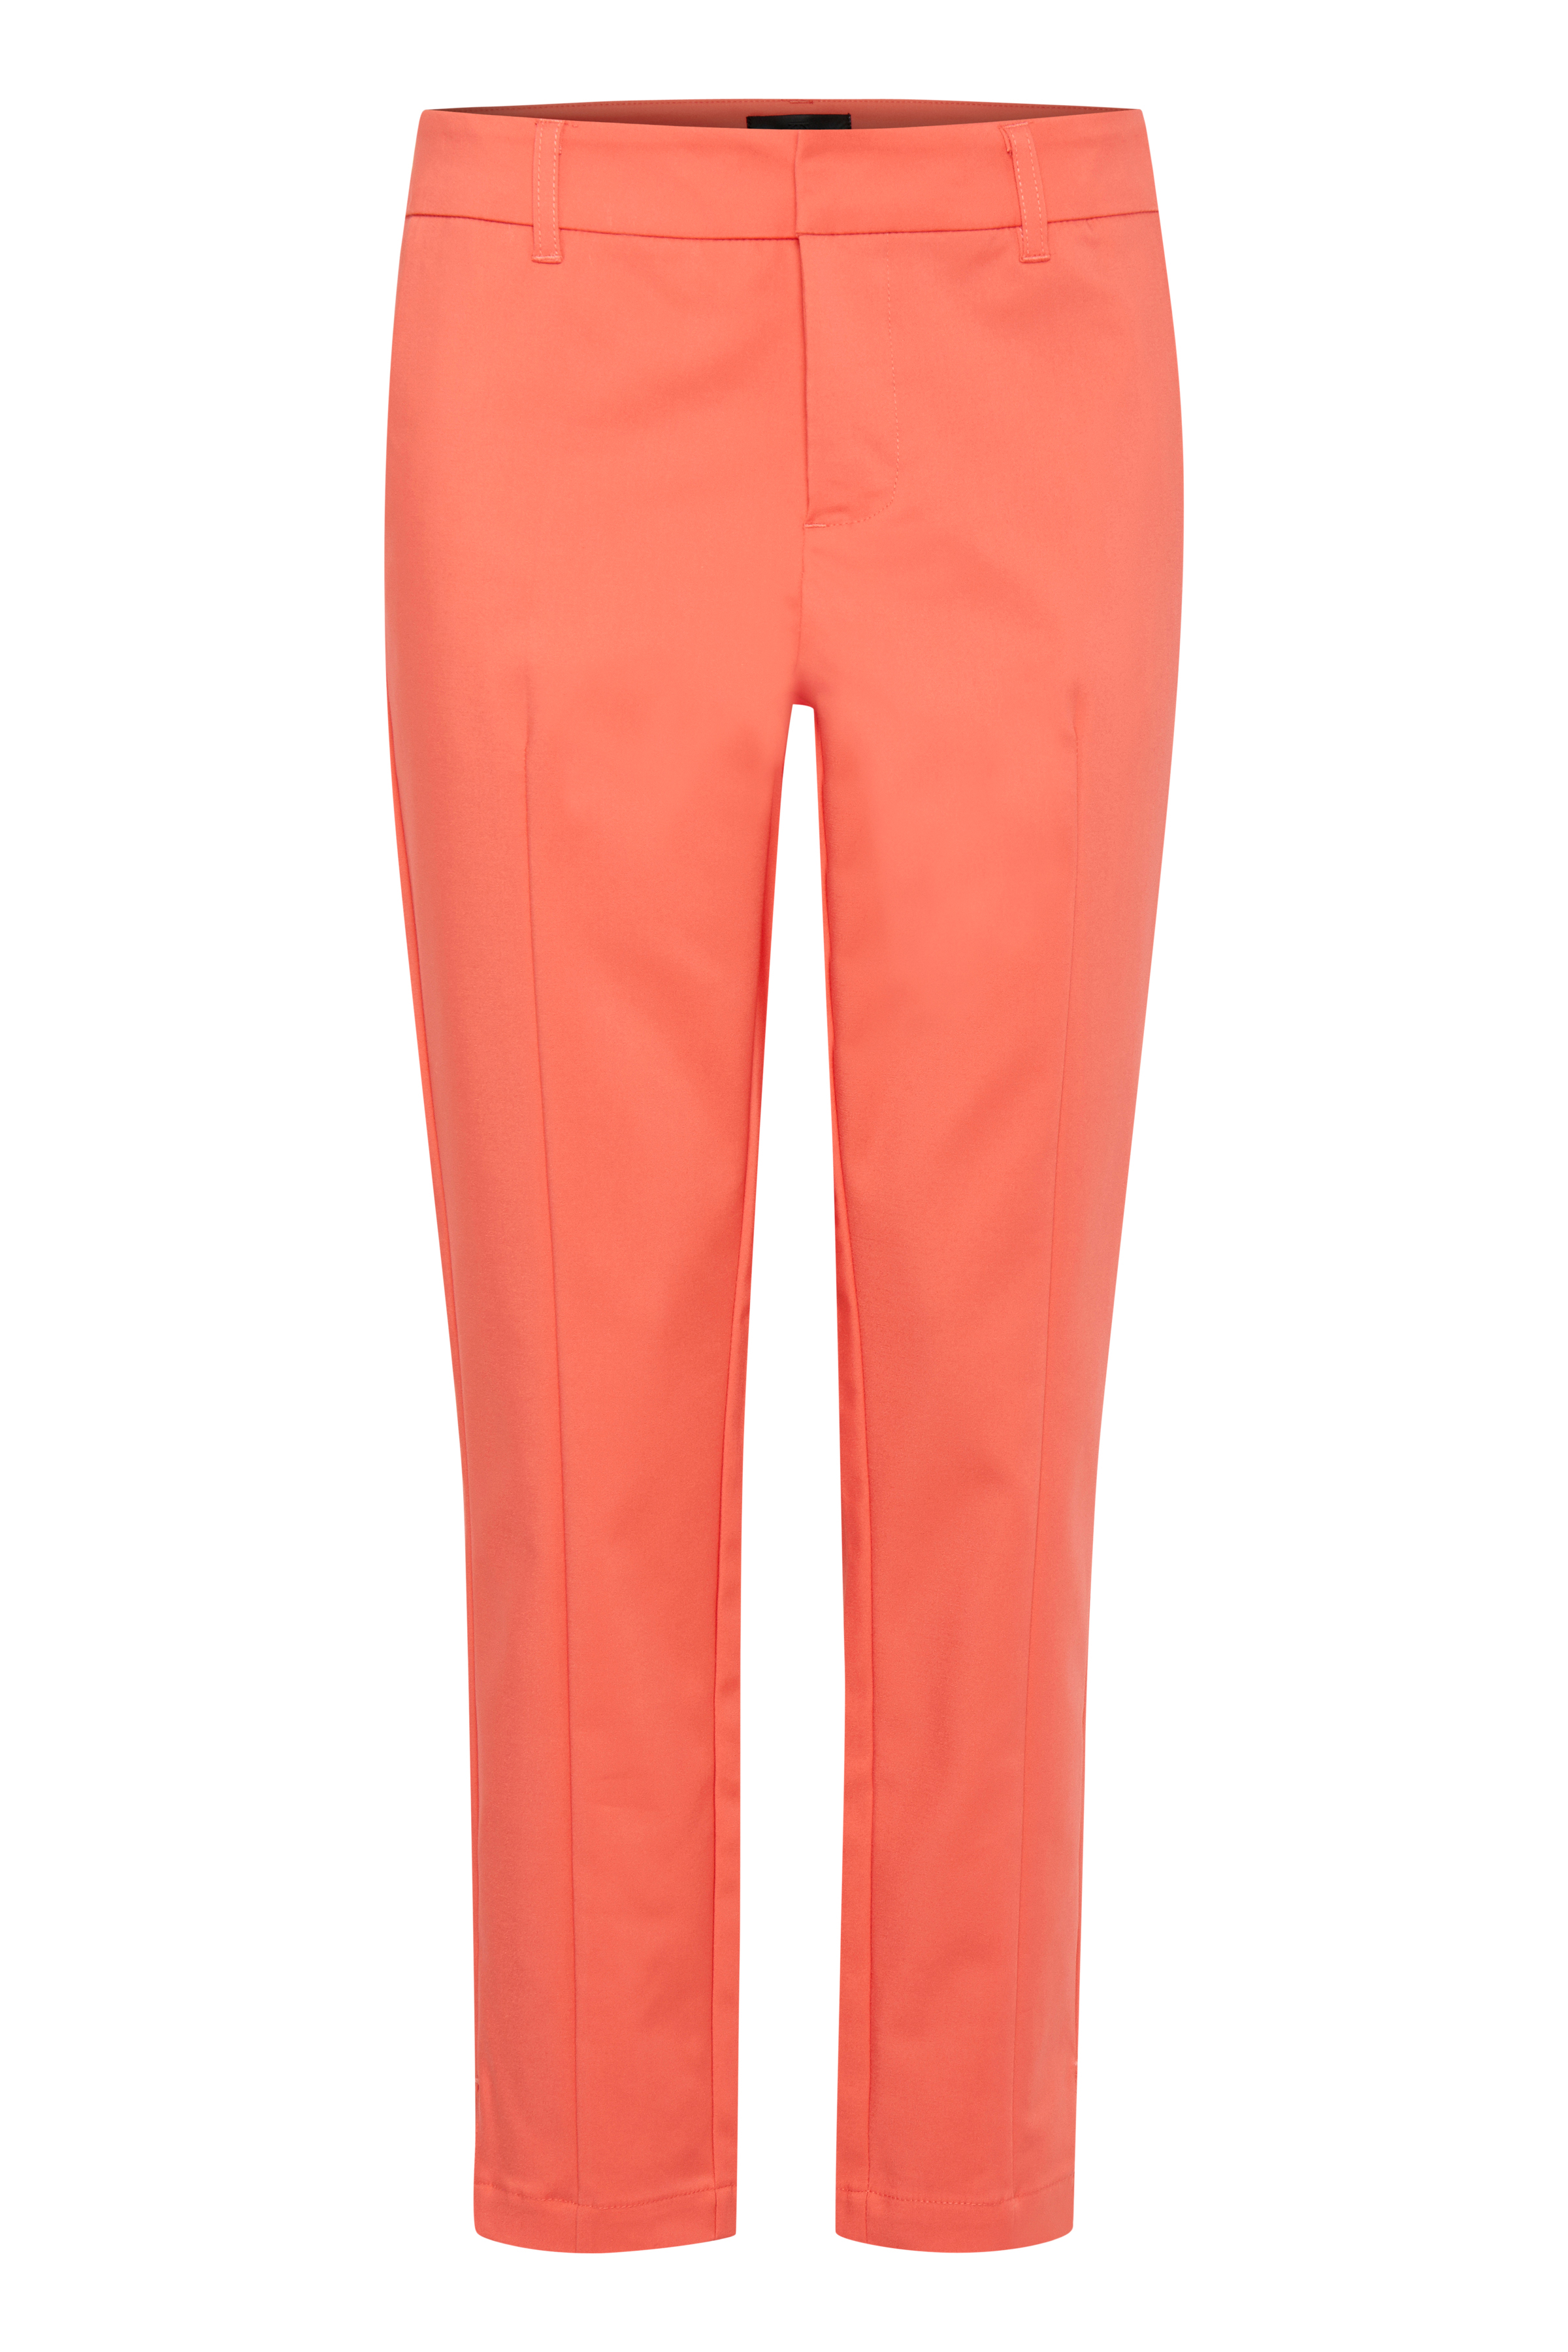 Orange PULZ Pulz Jeans Dame Bukser - Deep Sea Coral casual Bukser for